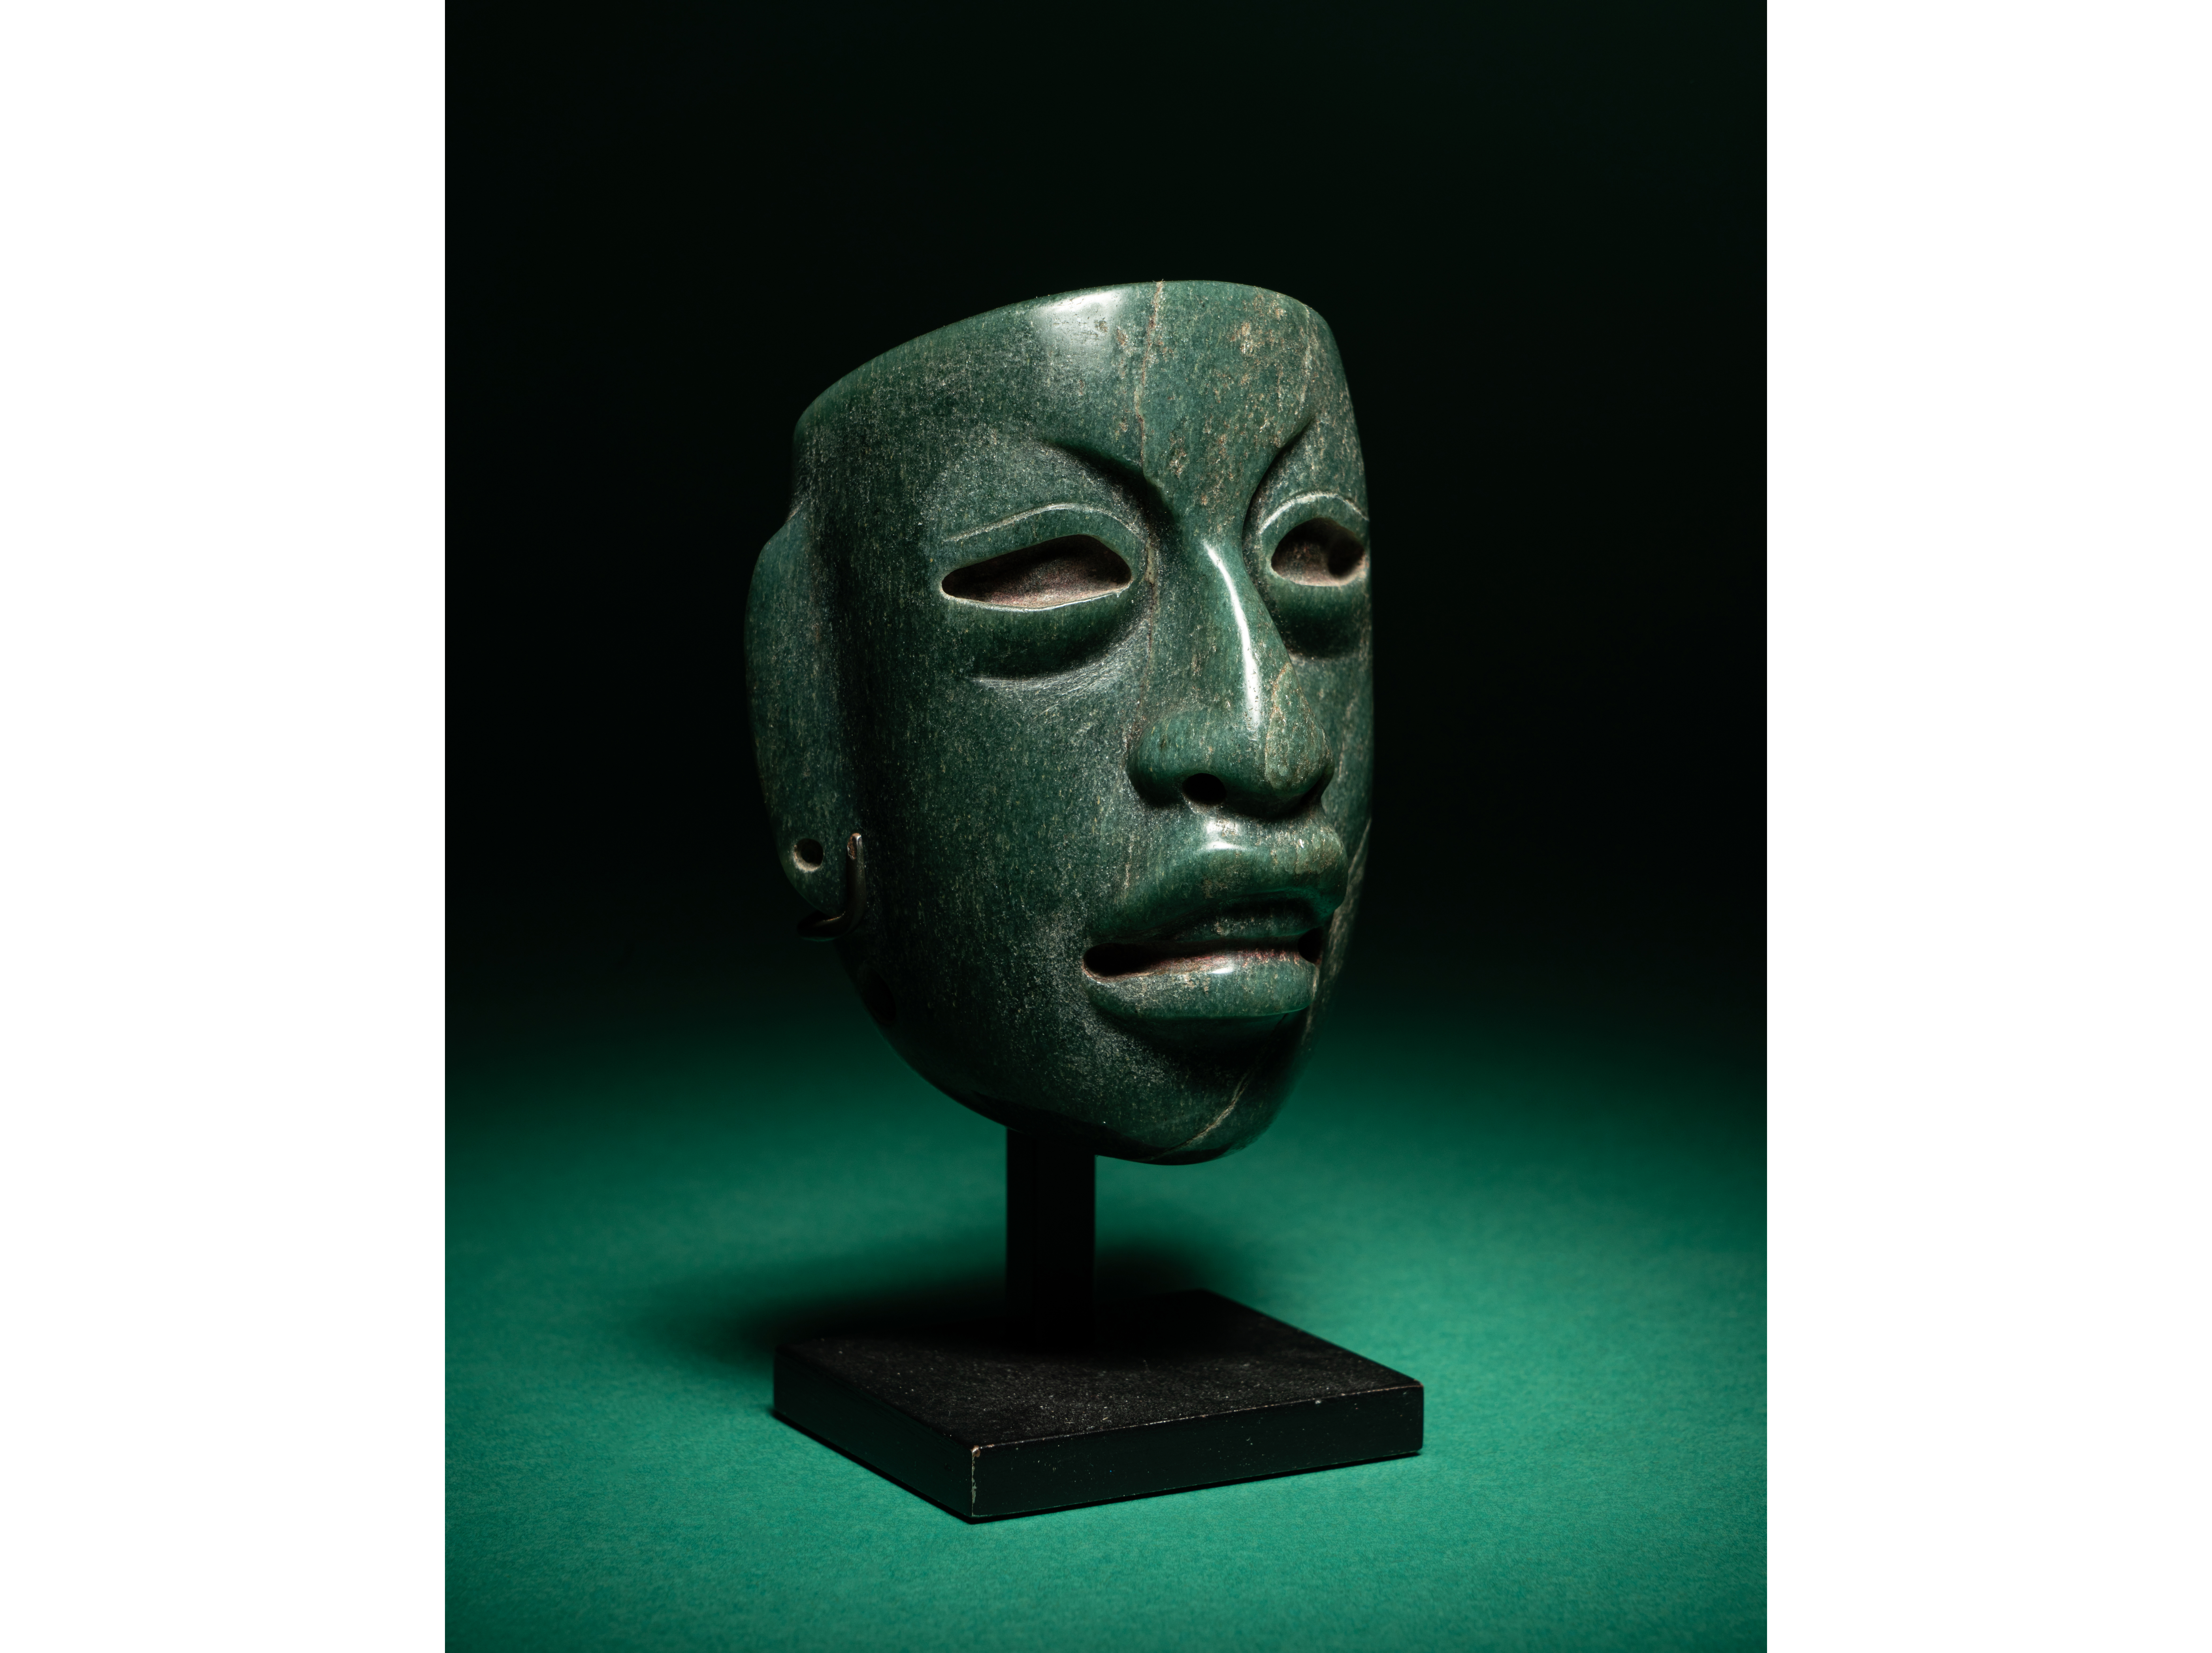 Olmec jade maskette, est. $6,000-$8,000